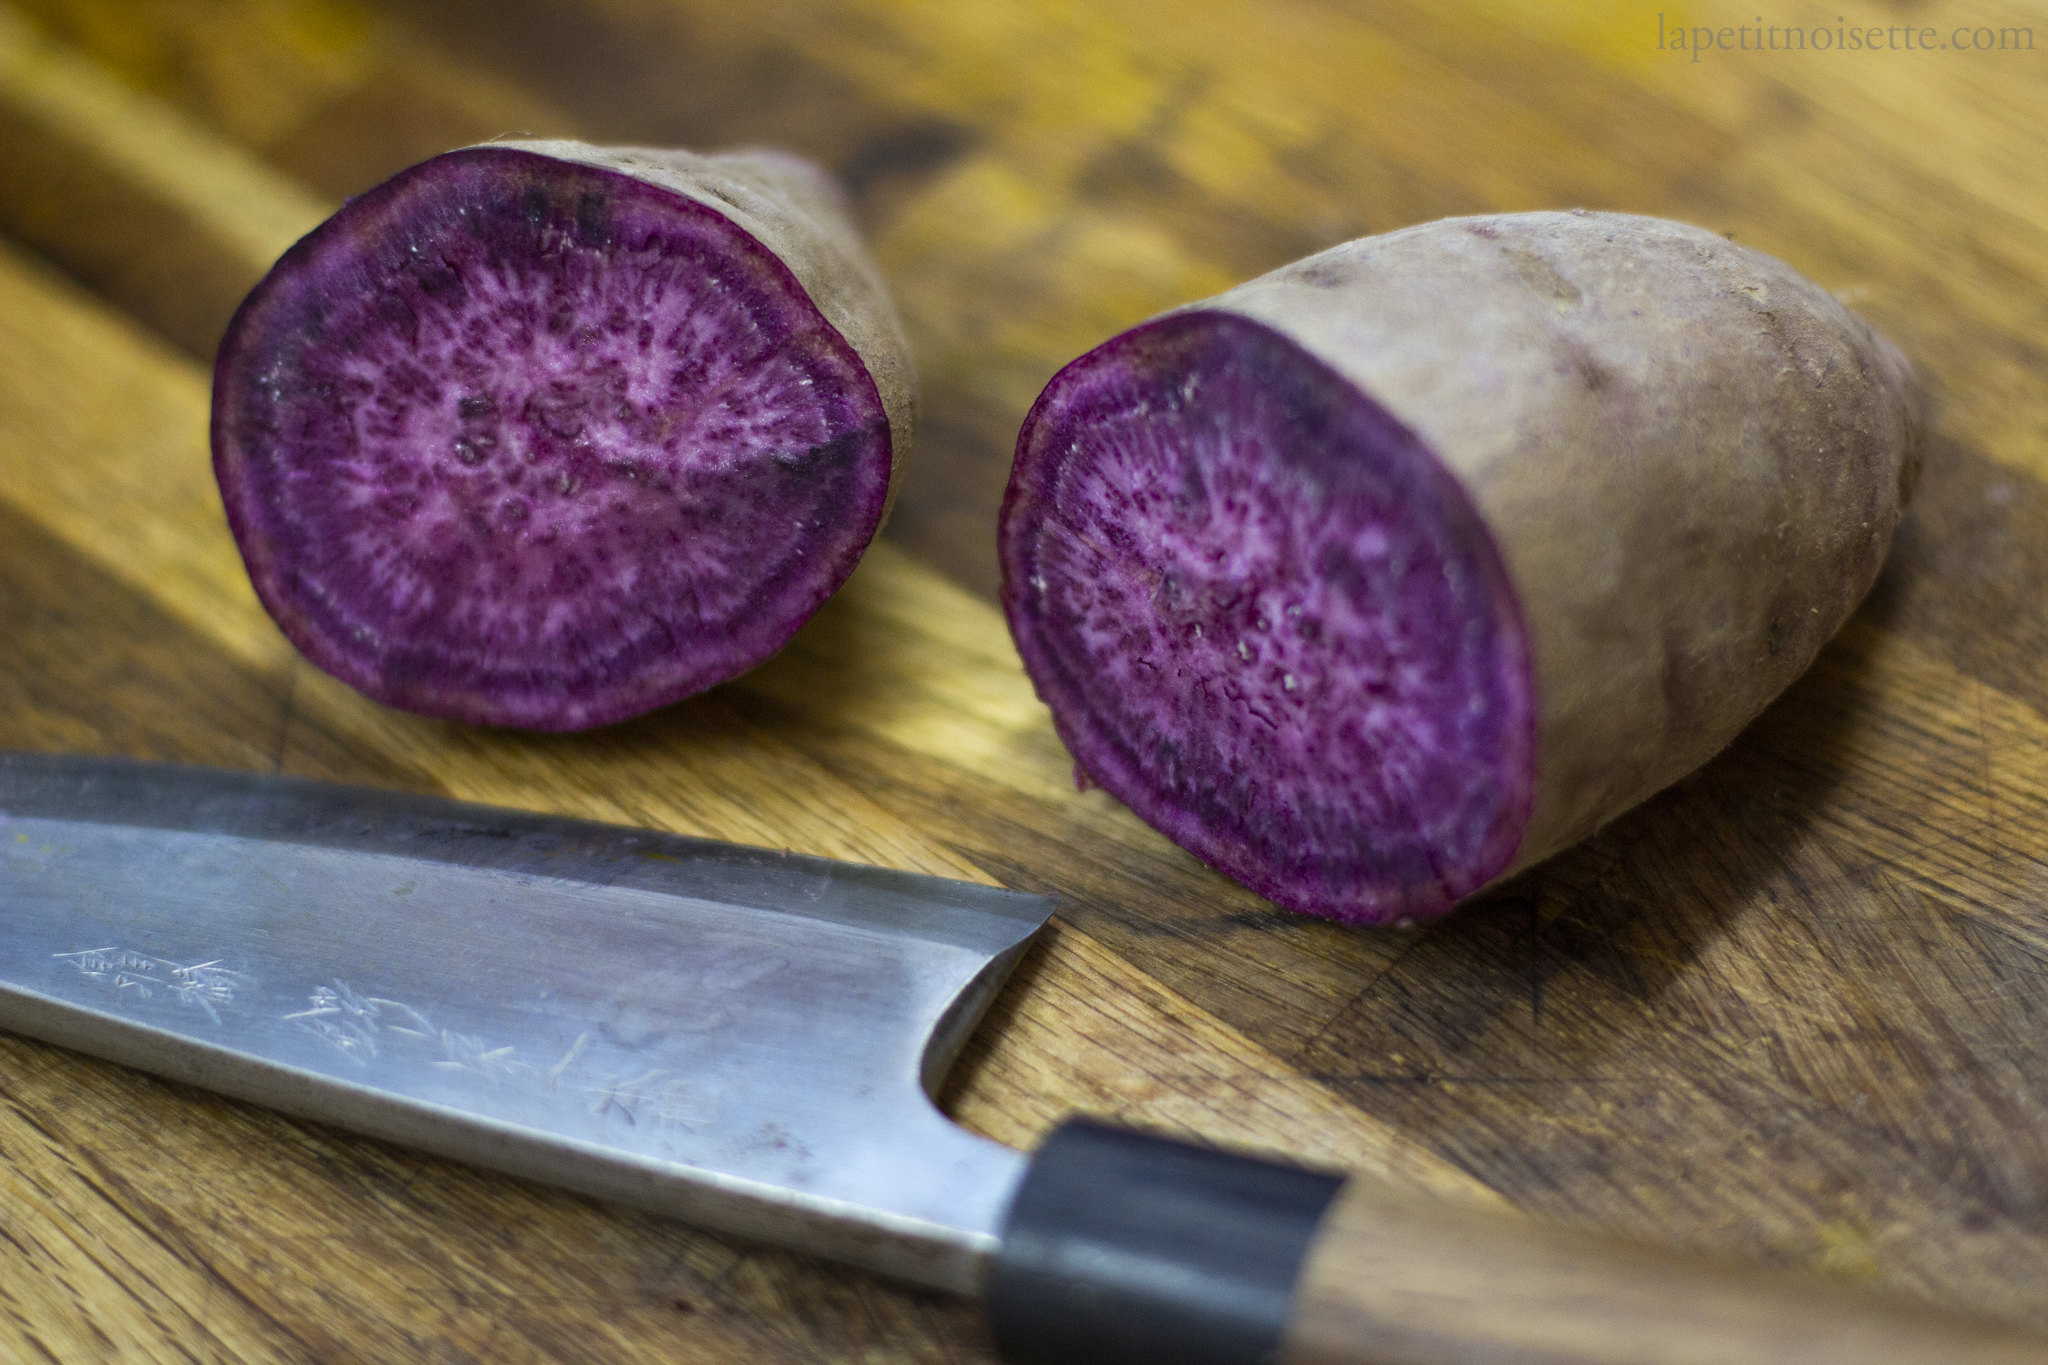 The cross section of purple sweet potato.